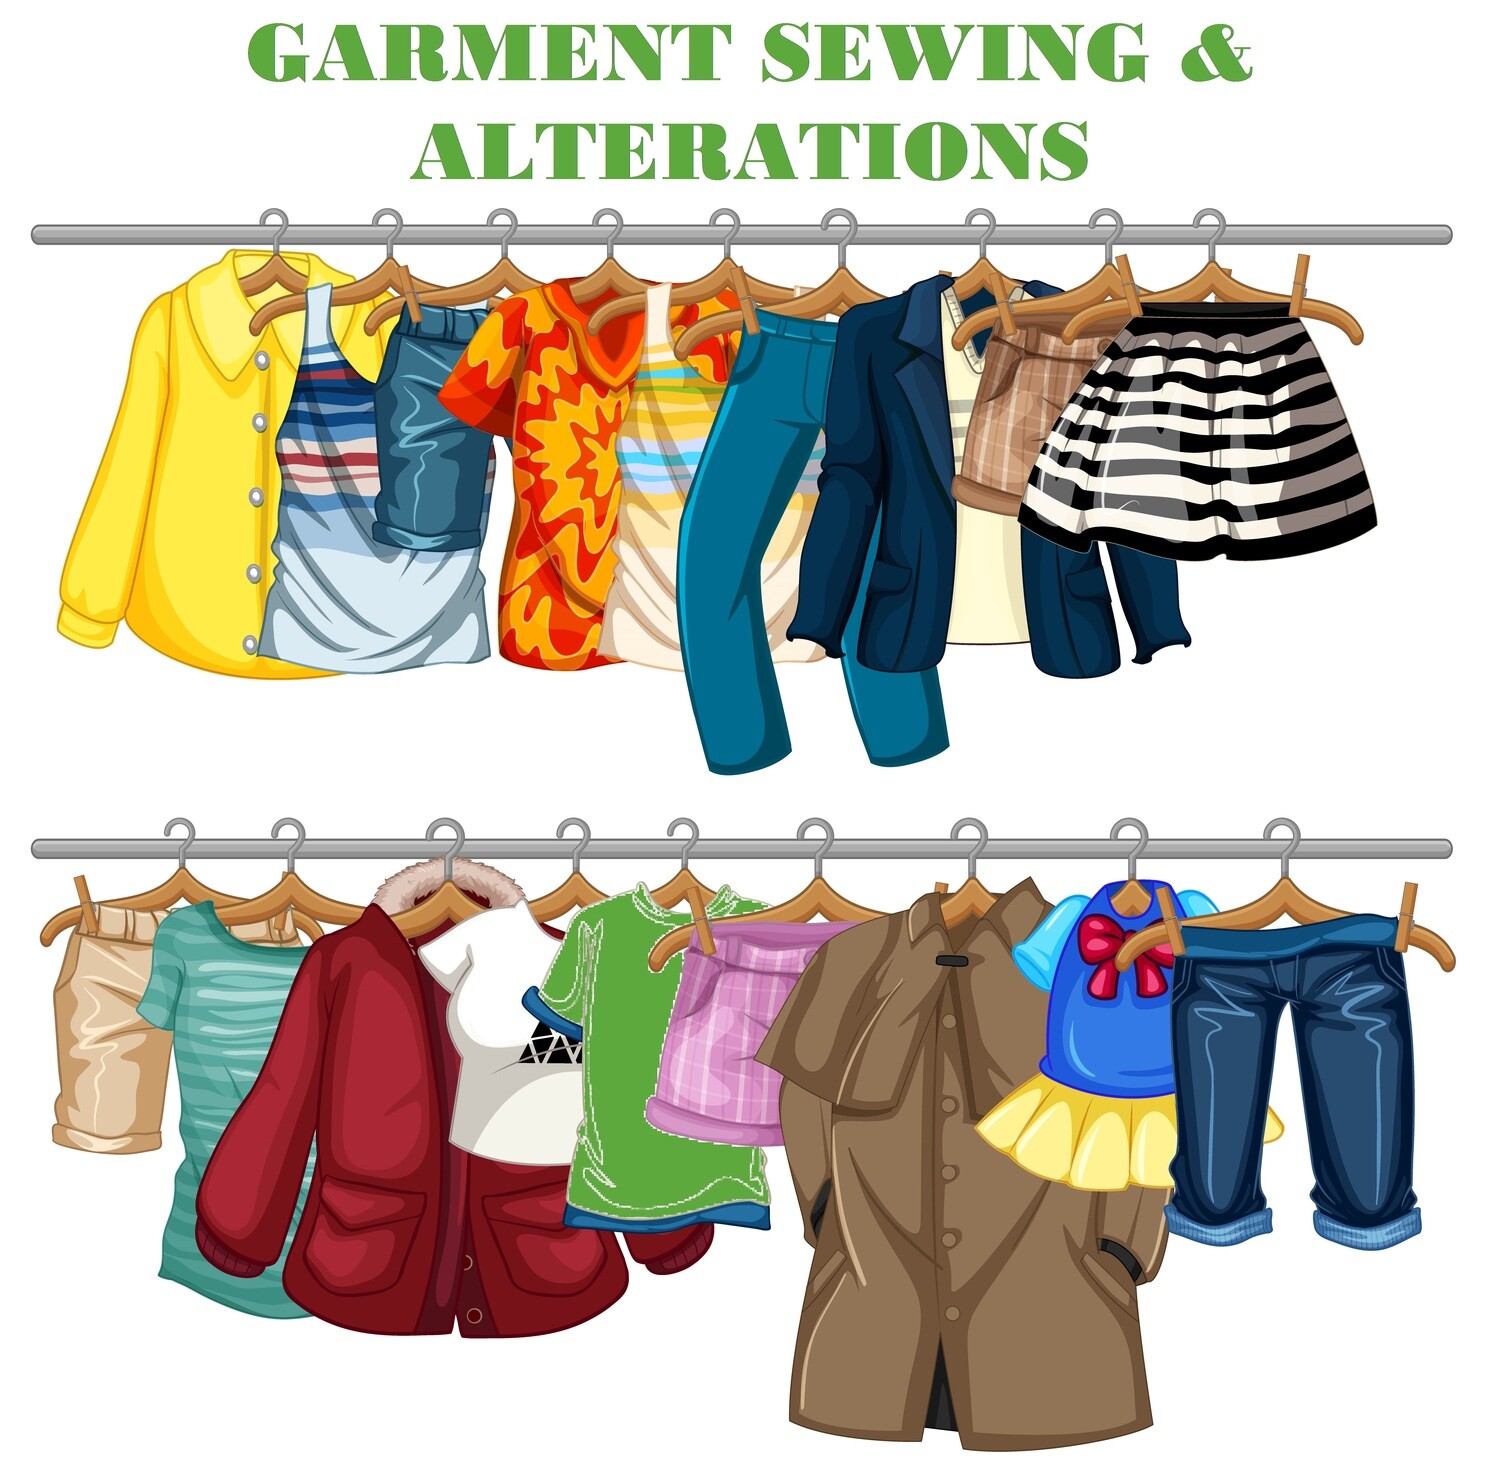 GARMENT SEWING & ALTERATIONS
Thursday November 16th, 10:30 am - 4:30 pm